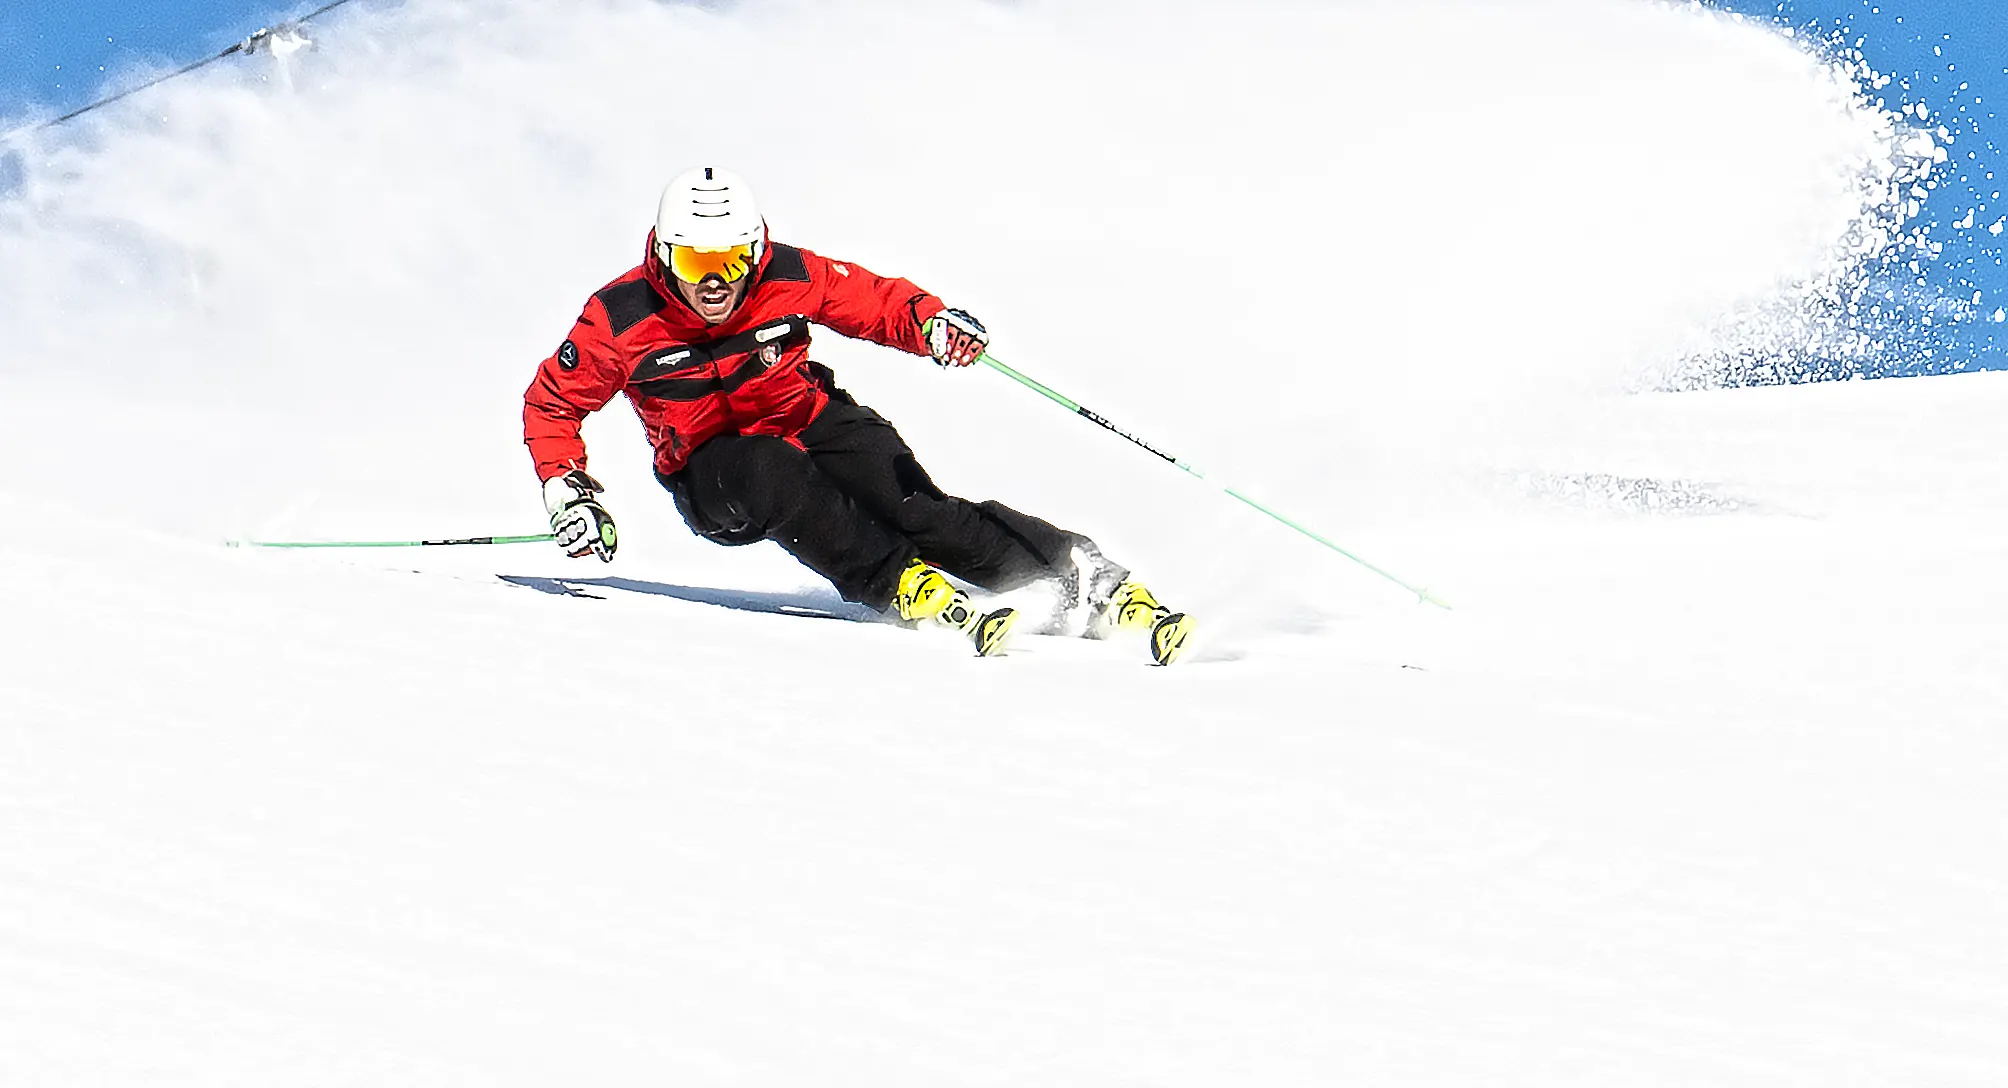 Swiss Ski School St Mortiz instructor skiing strong